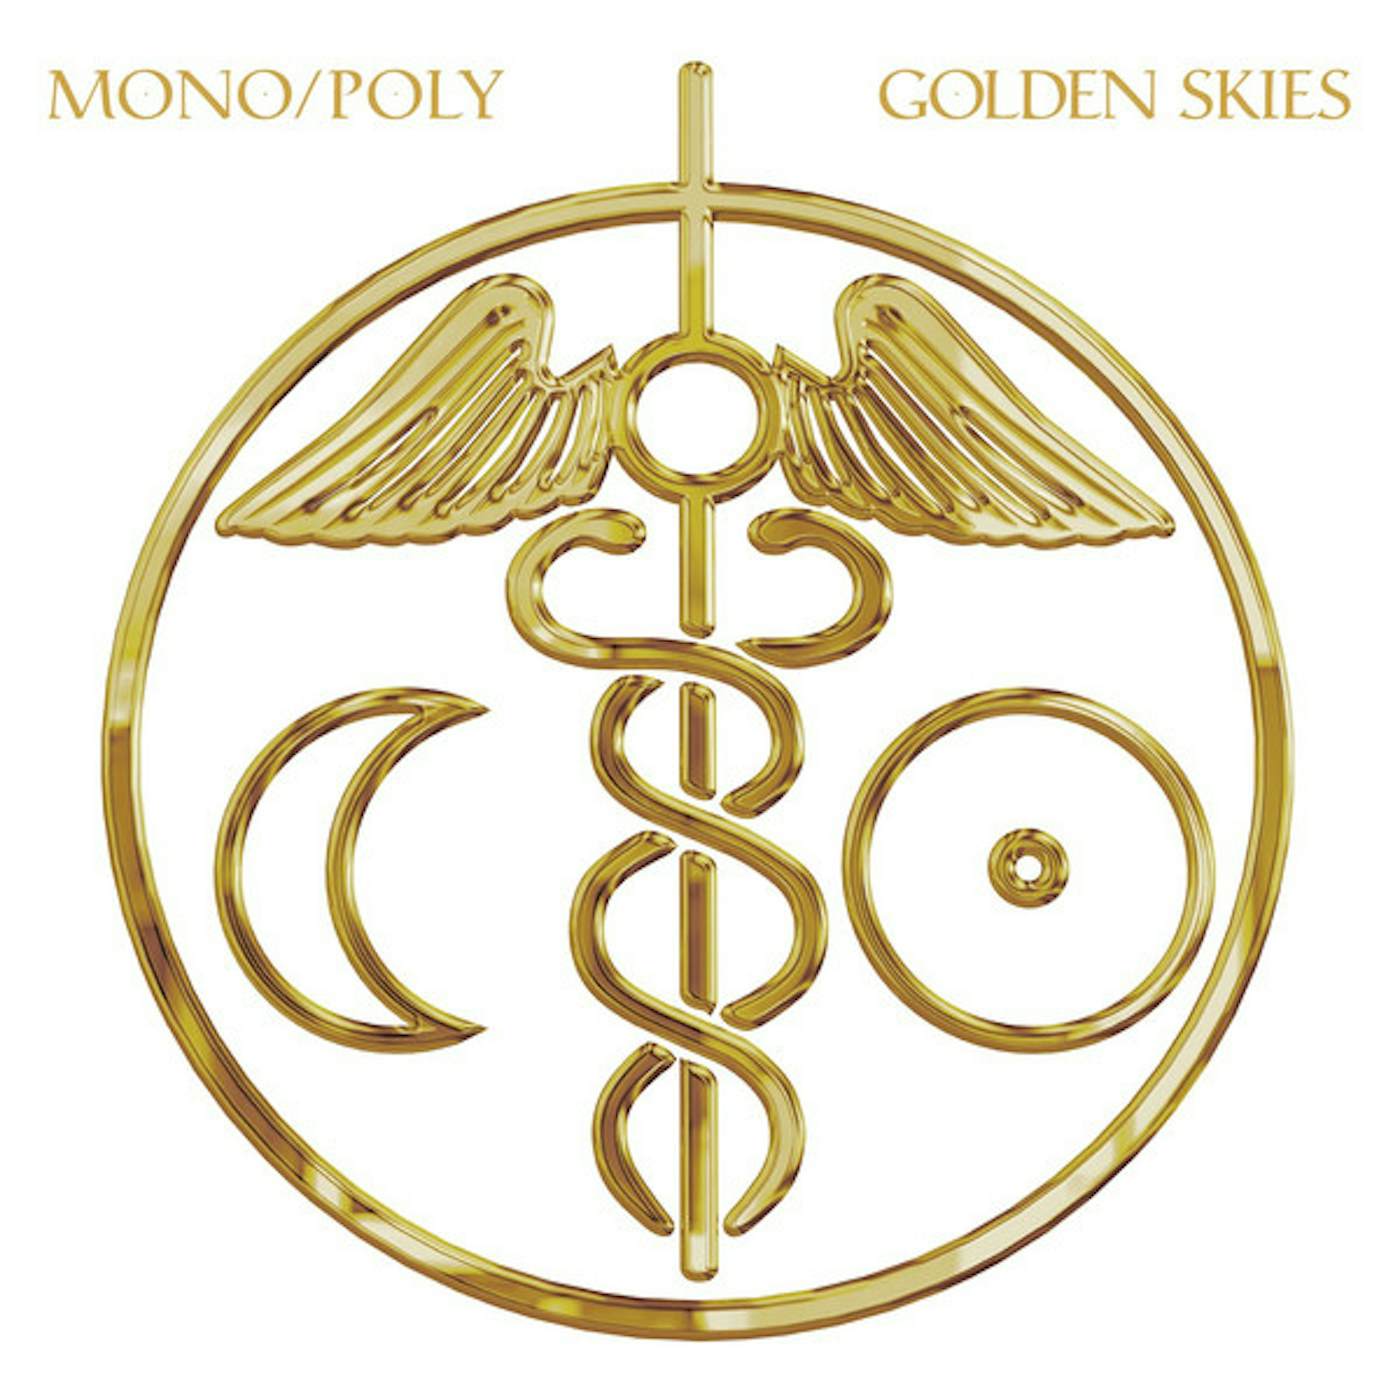 Mono/Poly Golden Skies Vinyl Record